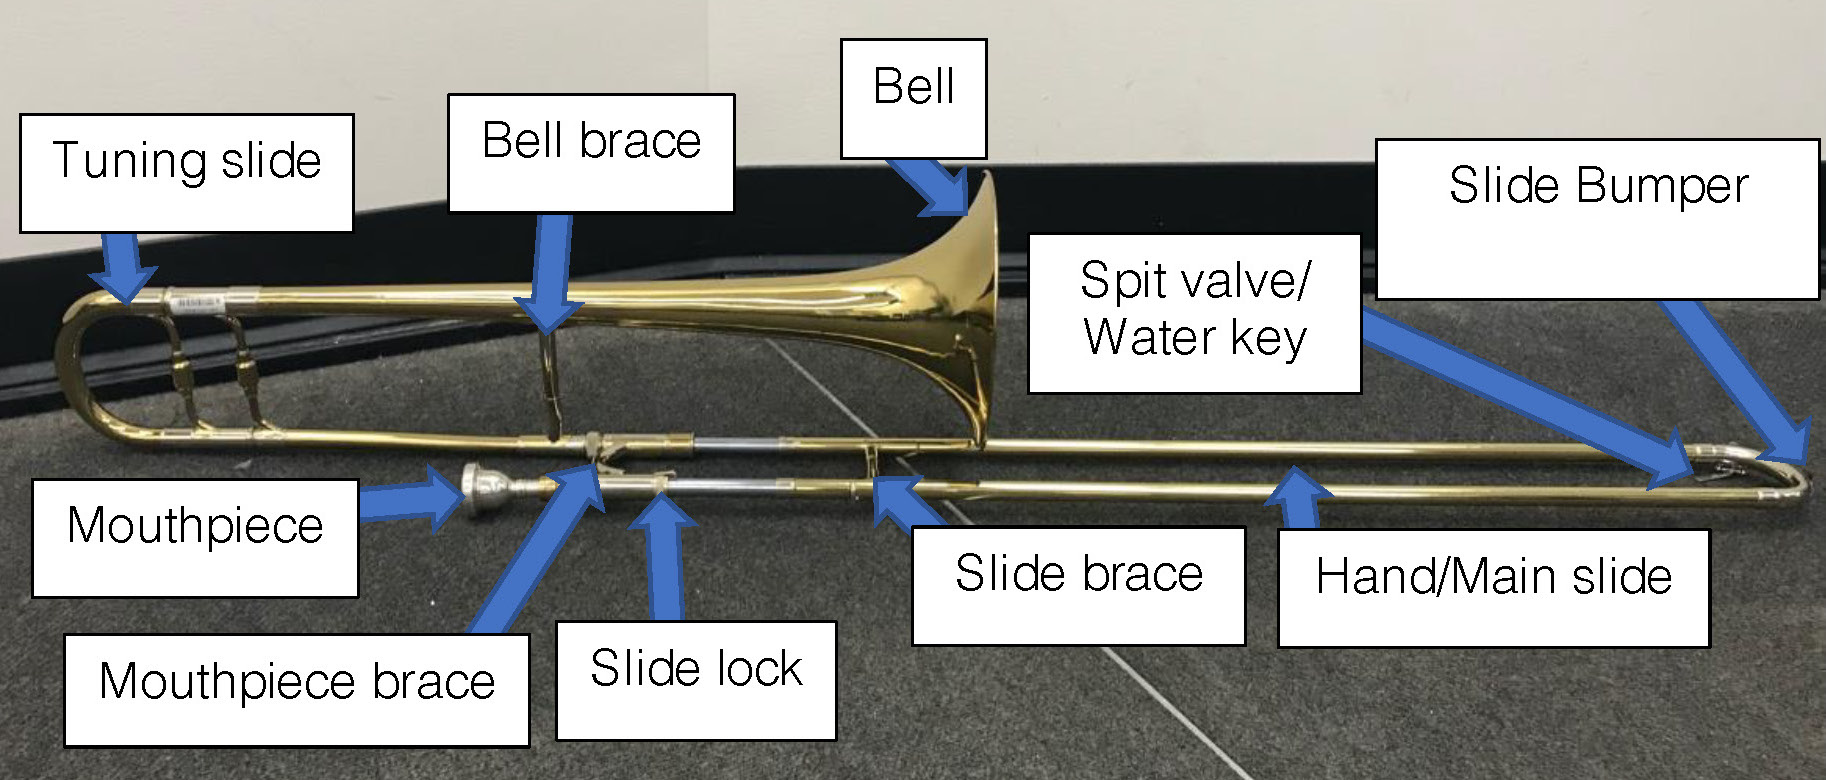 contra trombone position chart